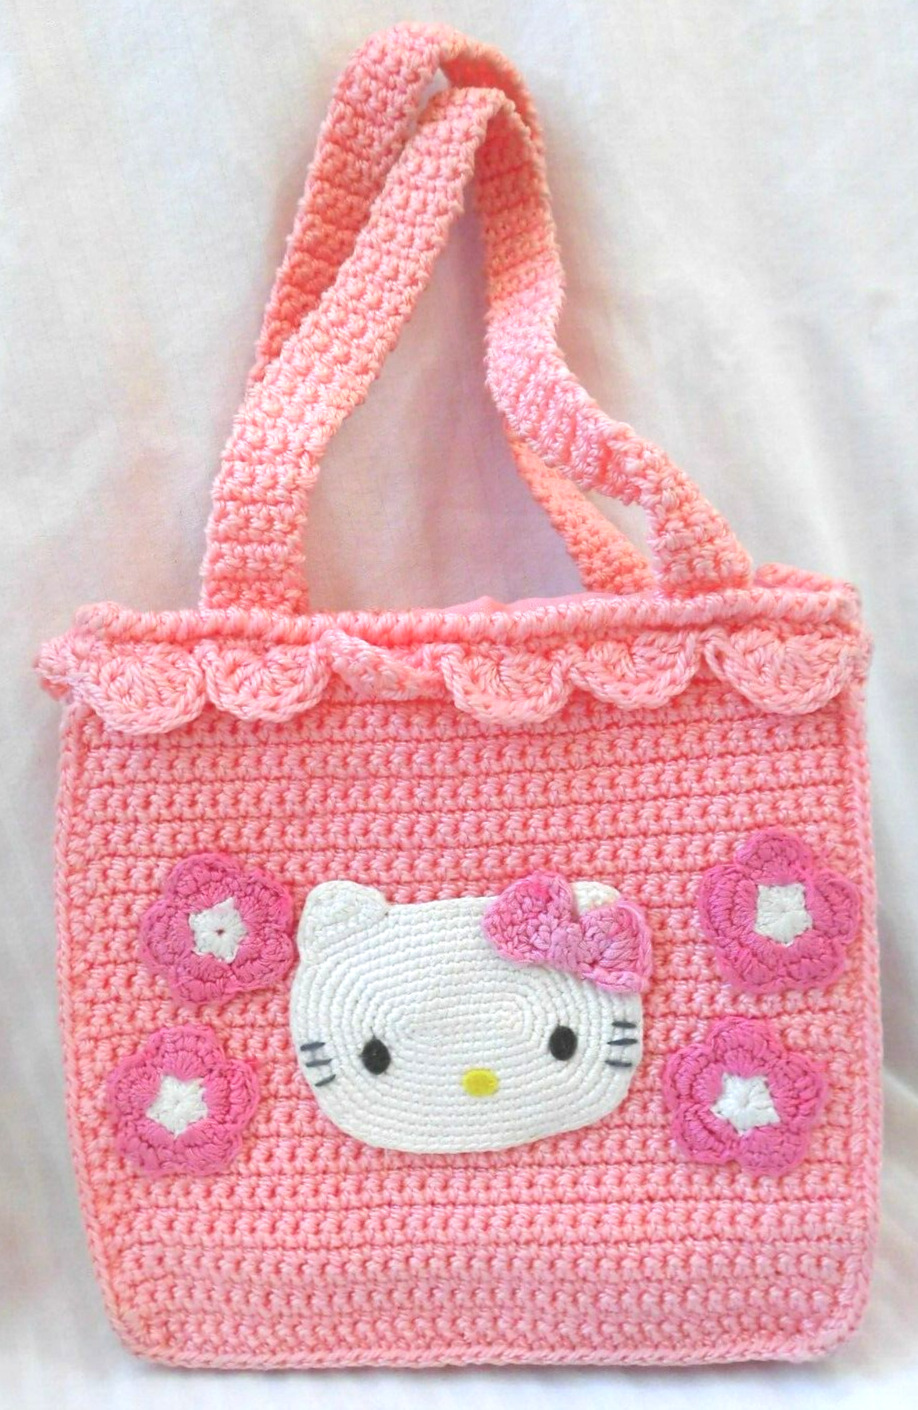 SANRIO Smiles \'76 2000, Hello Kitty Pink Crochet kid small size handbag carryall